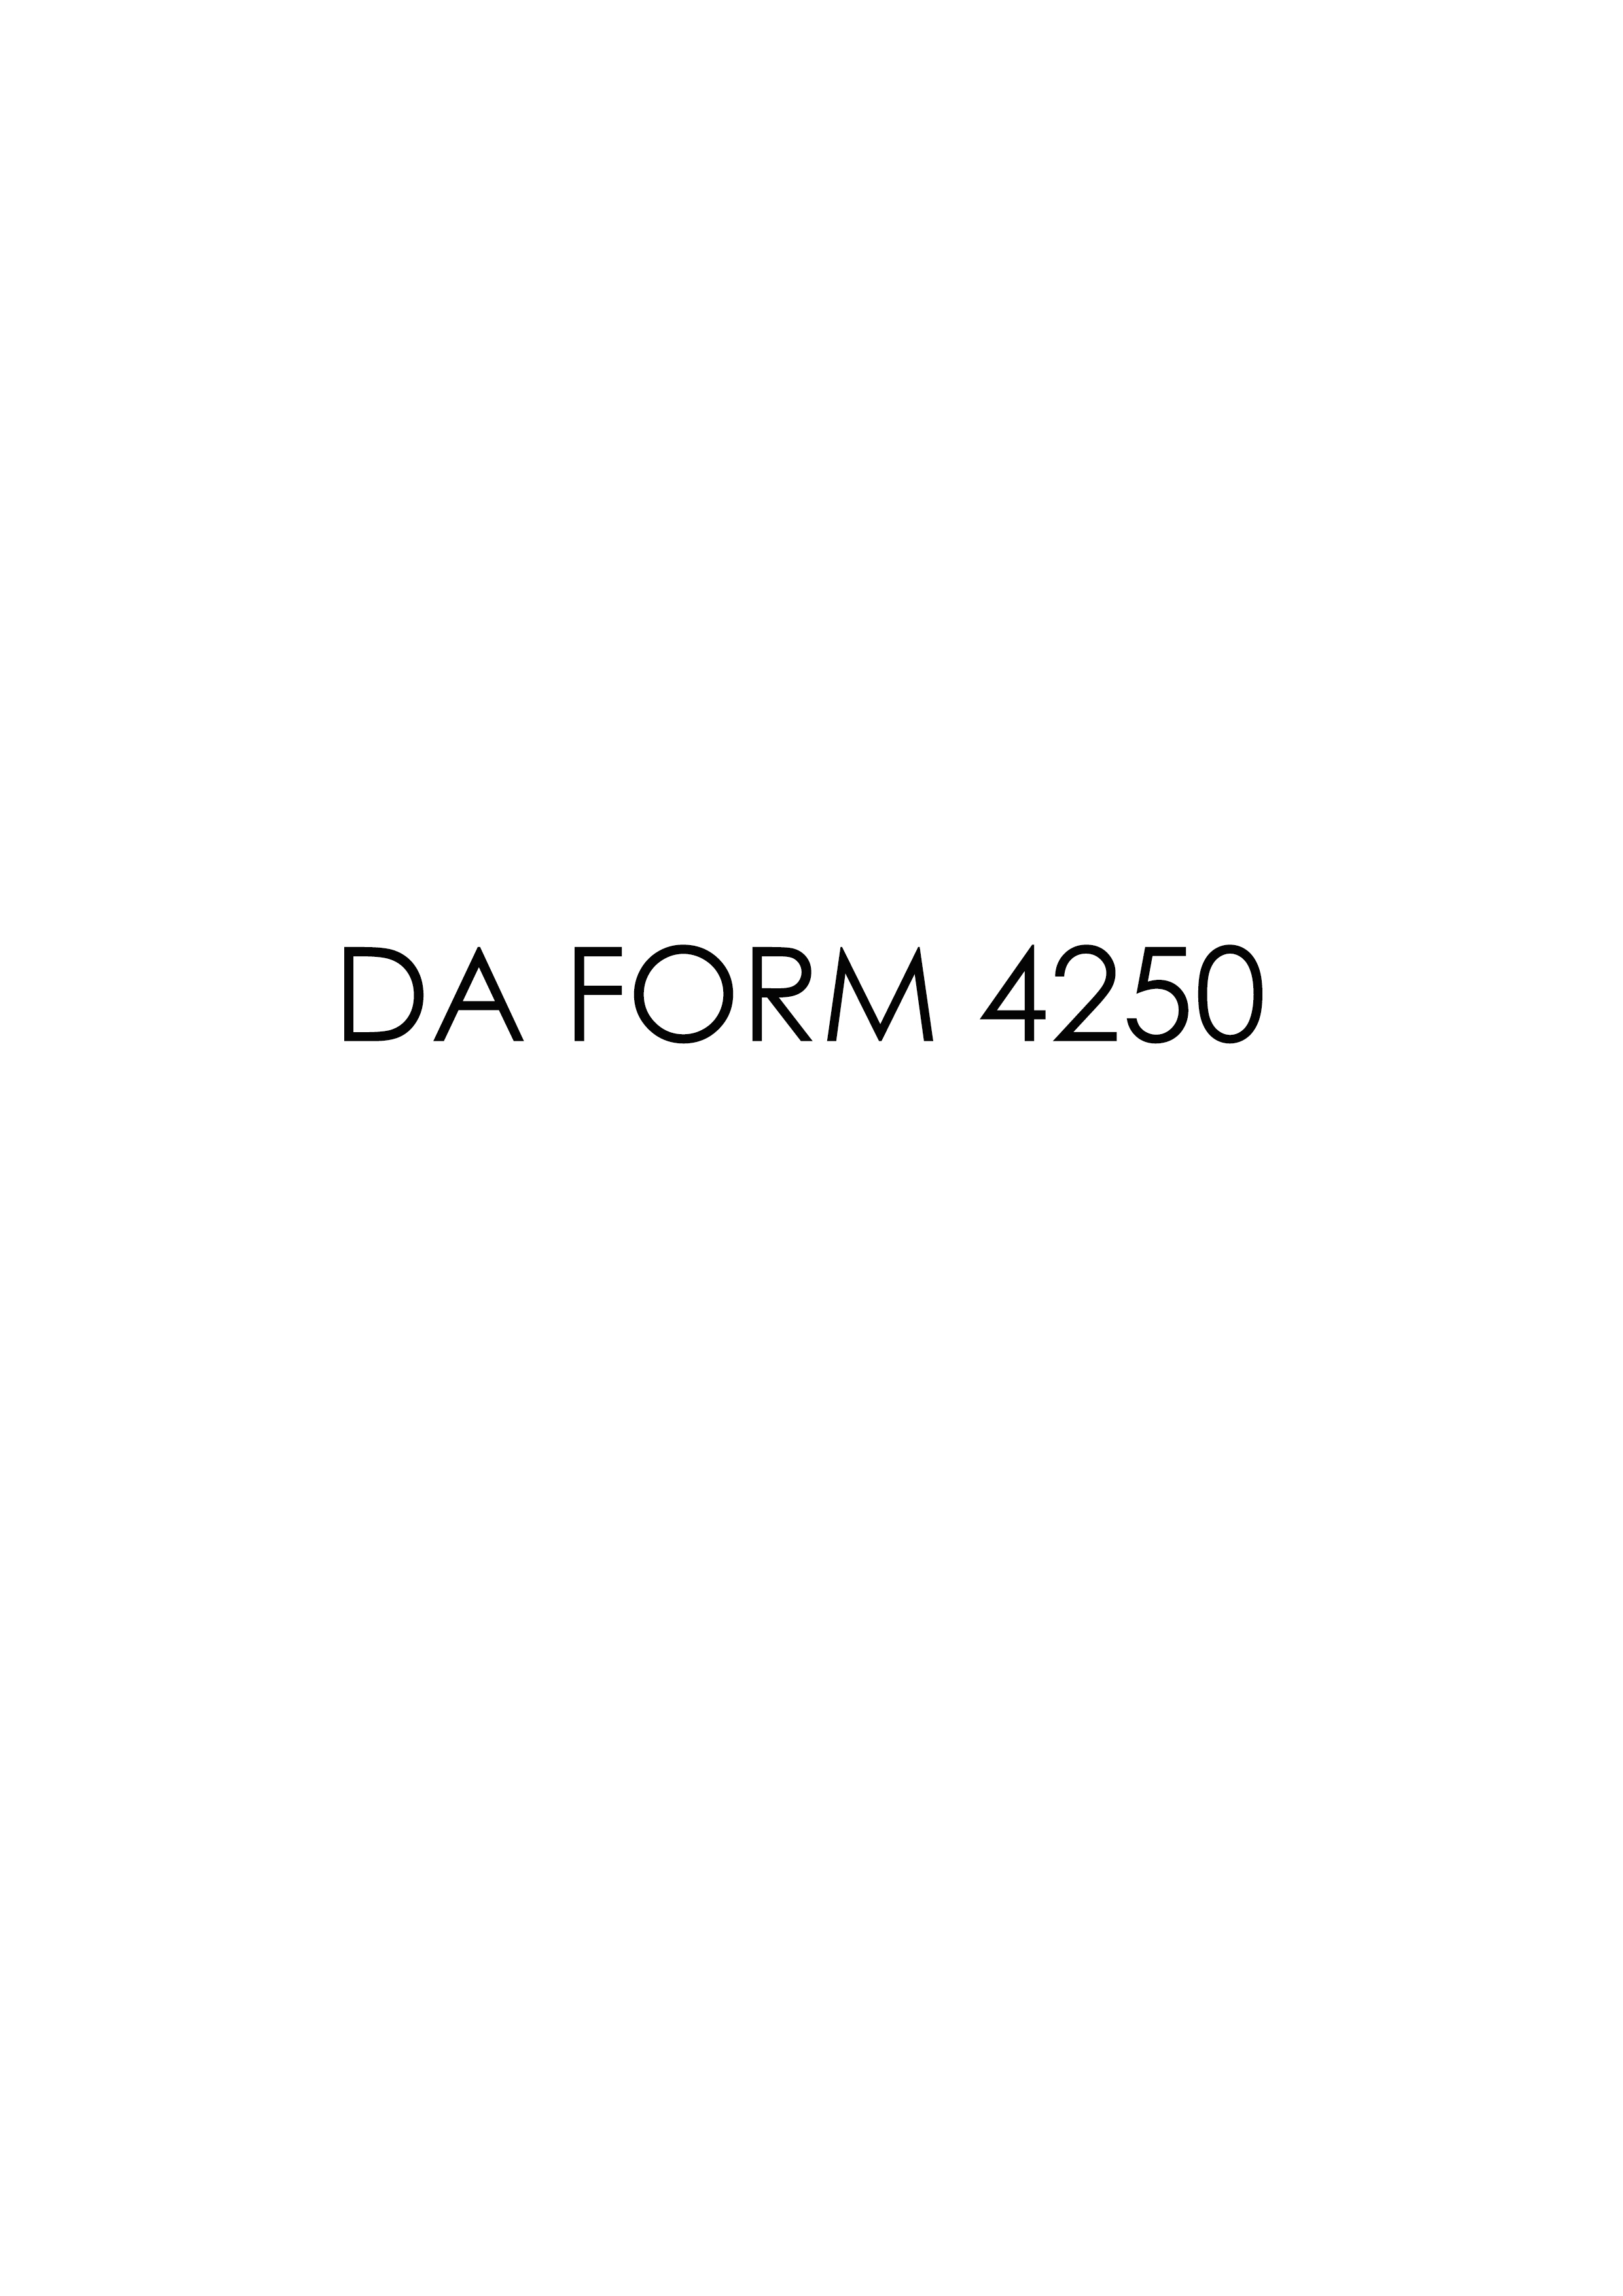 da Form 4250 fillable